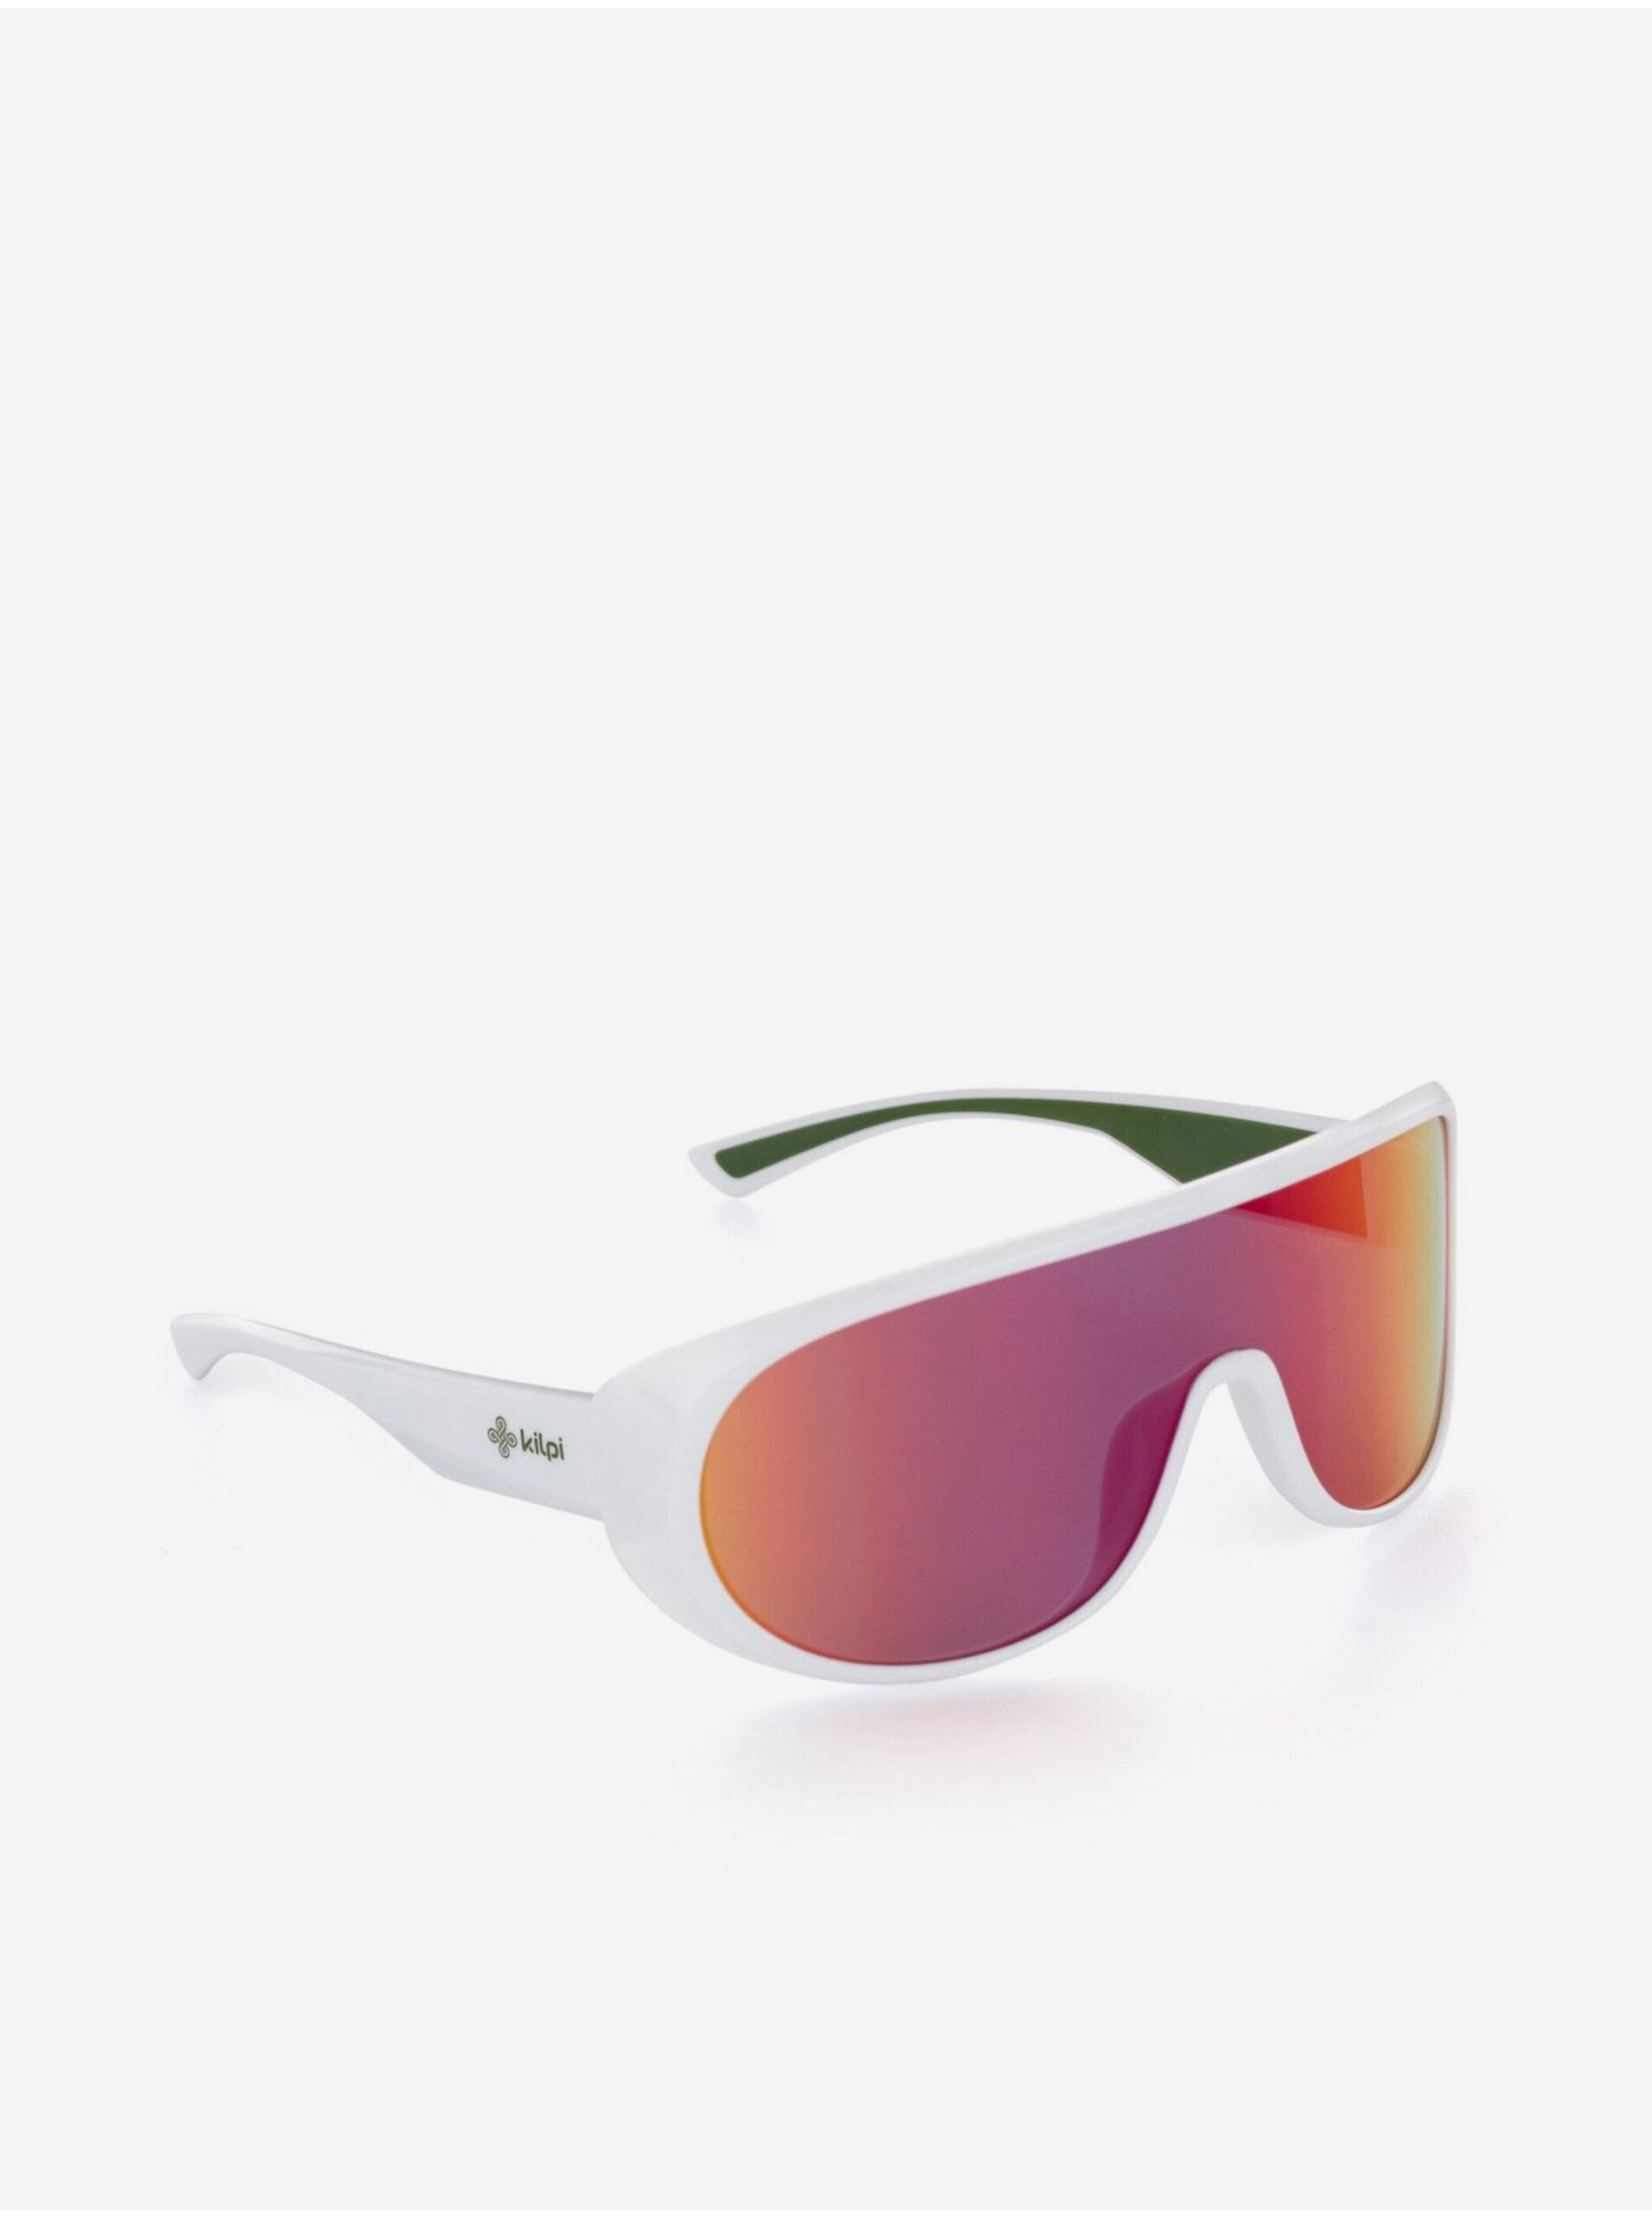 E-shop Biele športové slnečné okuliare Kilpi CORDEL